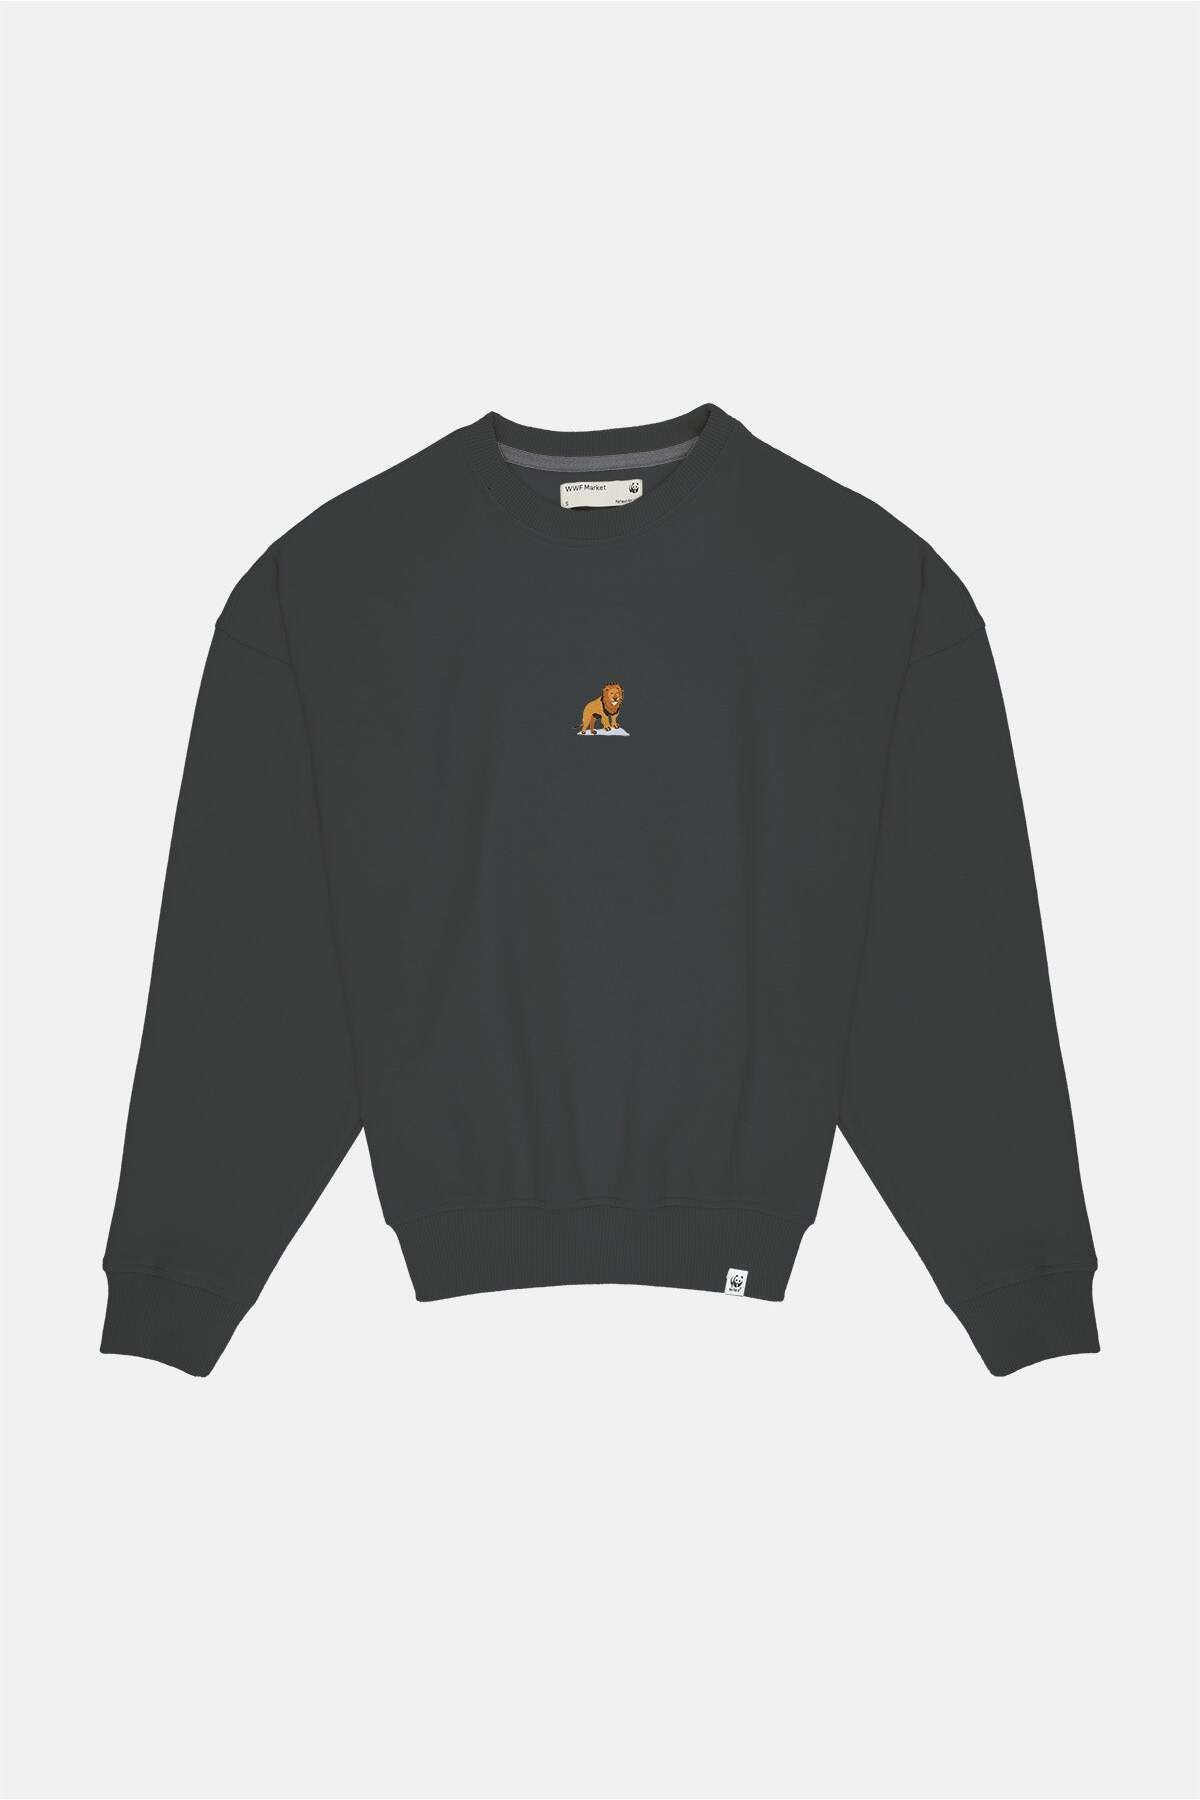 WWF Market Aslan Super Soft Oversize Sweatshirt - Antrasit